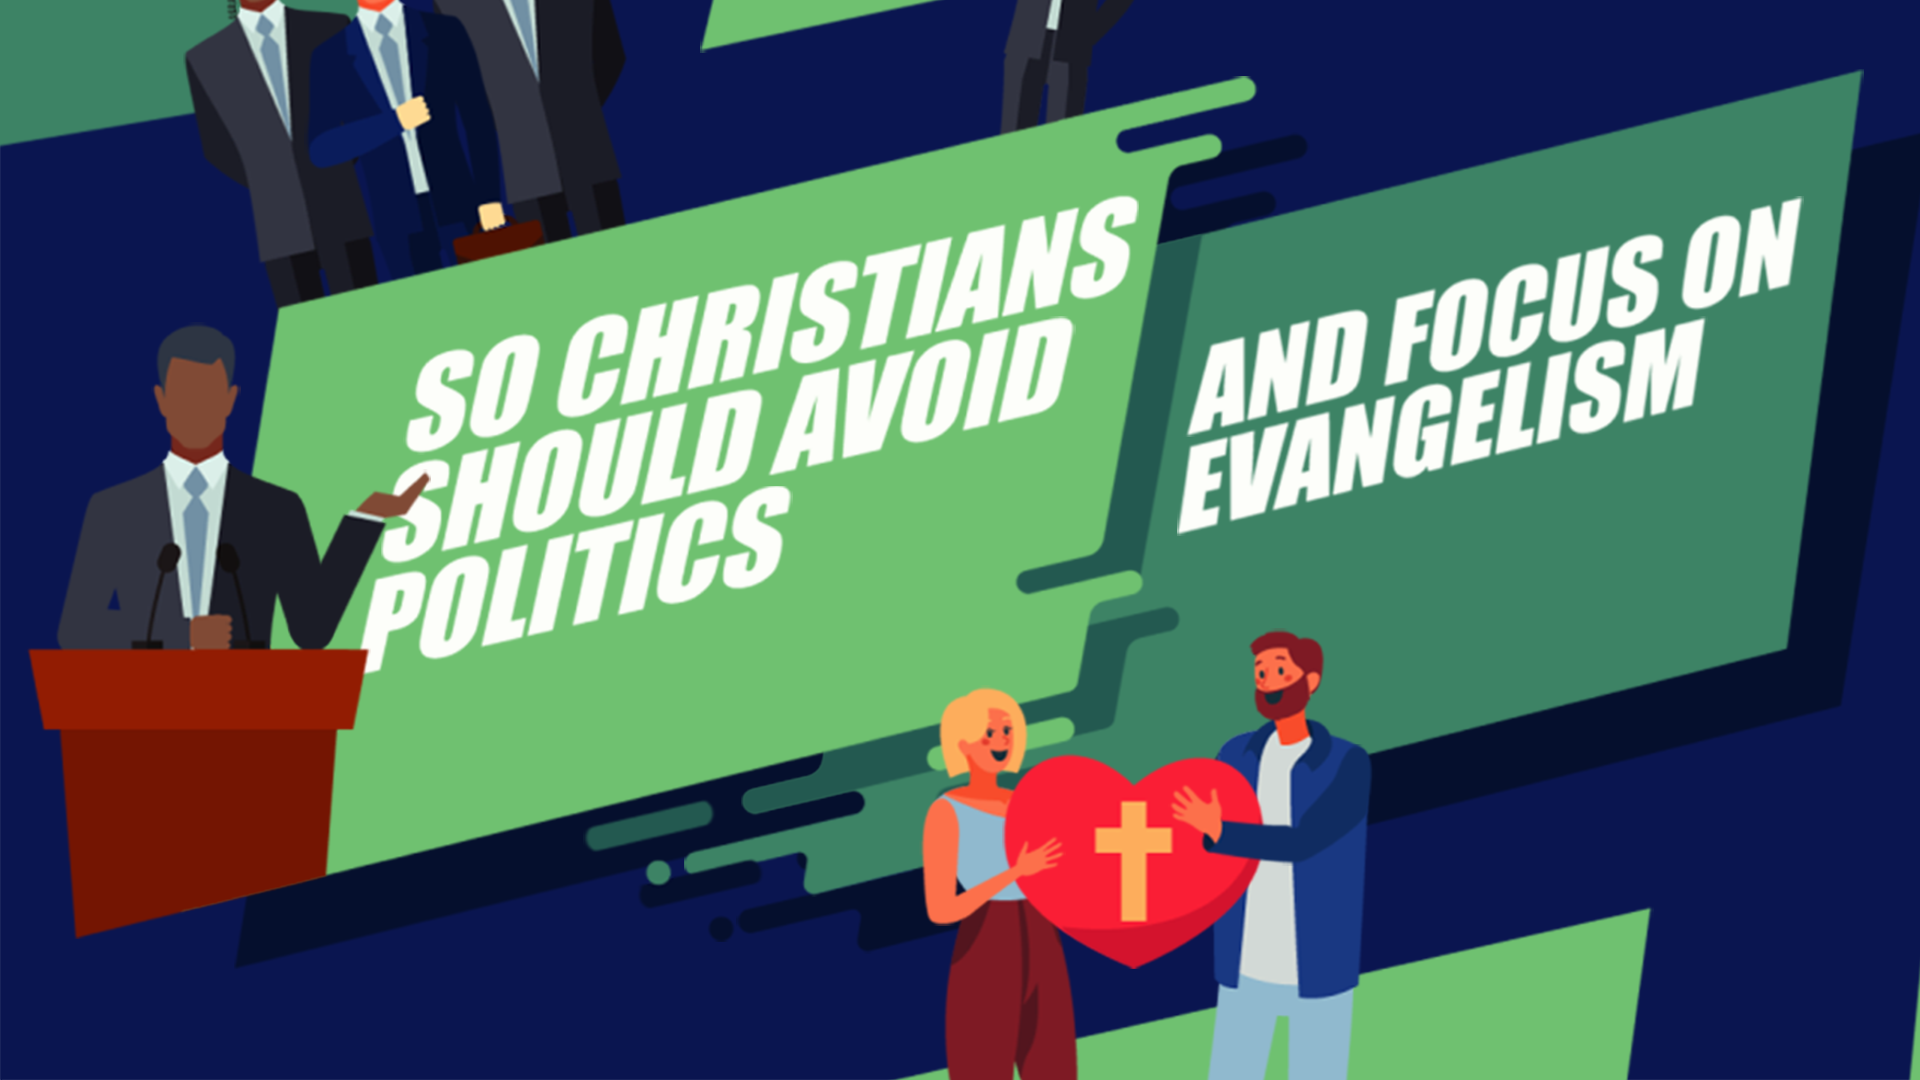 Christians Should Avoid Politics and Focus on Evangelism